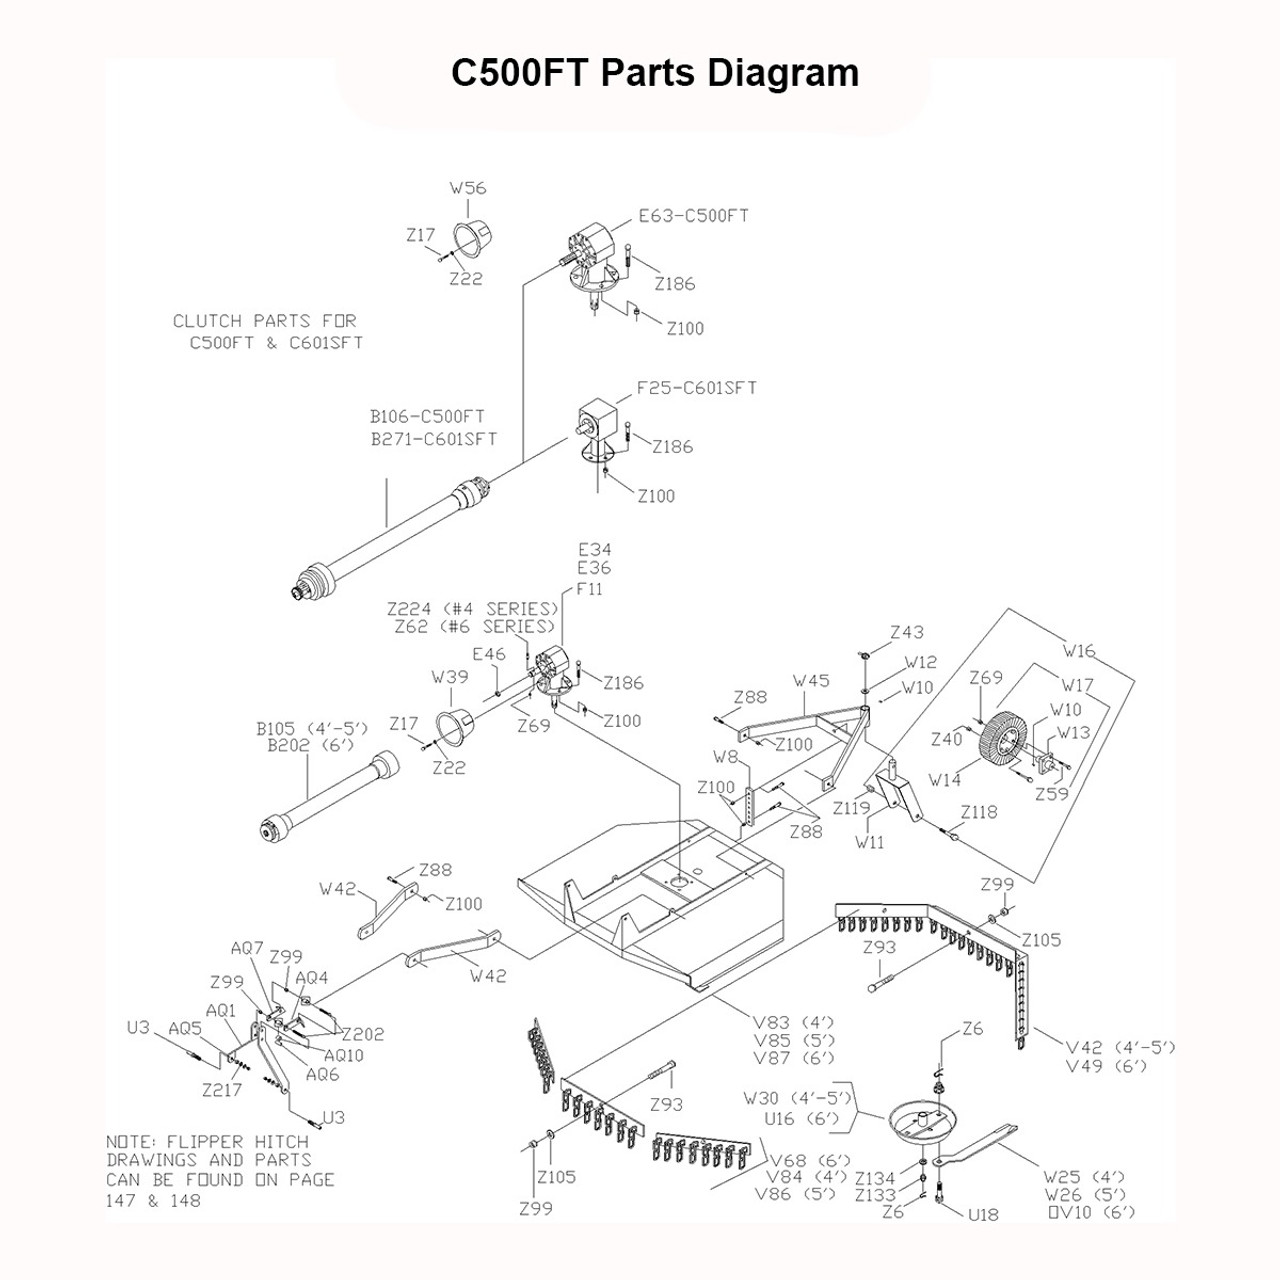 C500FT Parts Diagram